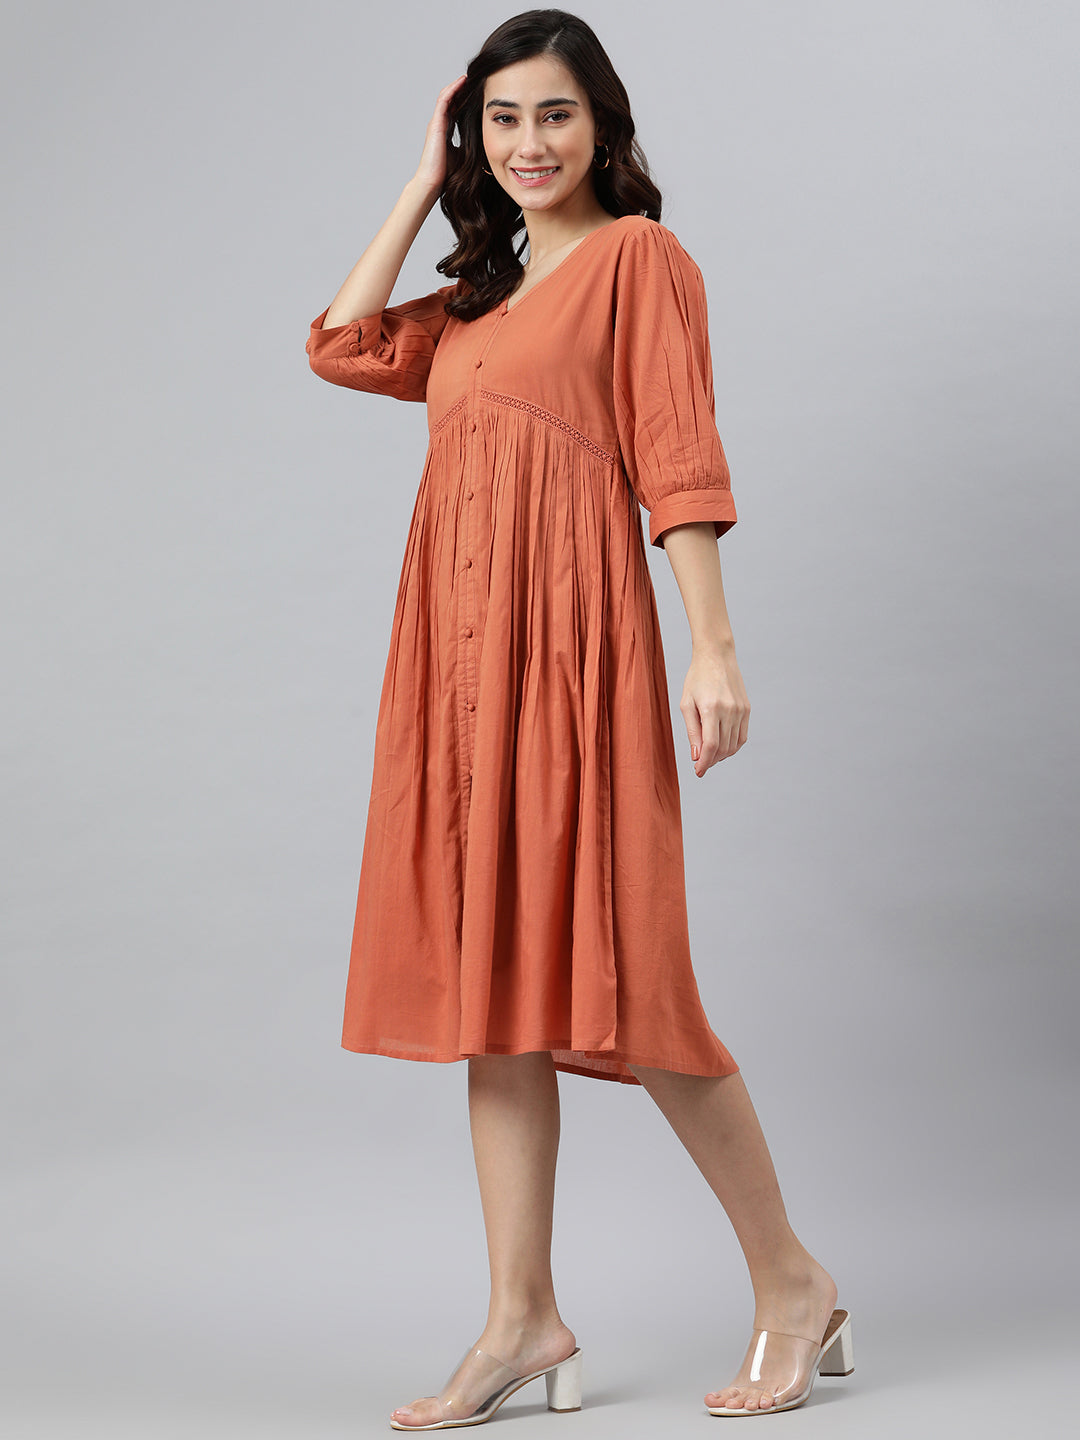 Women's Solid Coral Orange Cotton Dress - Janasya